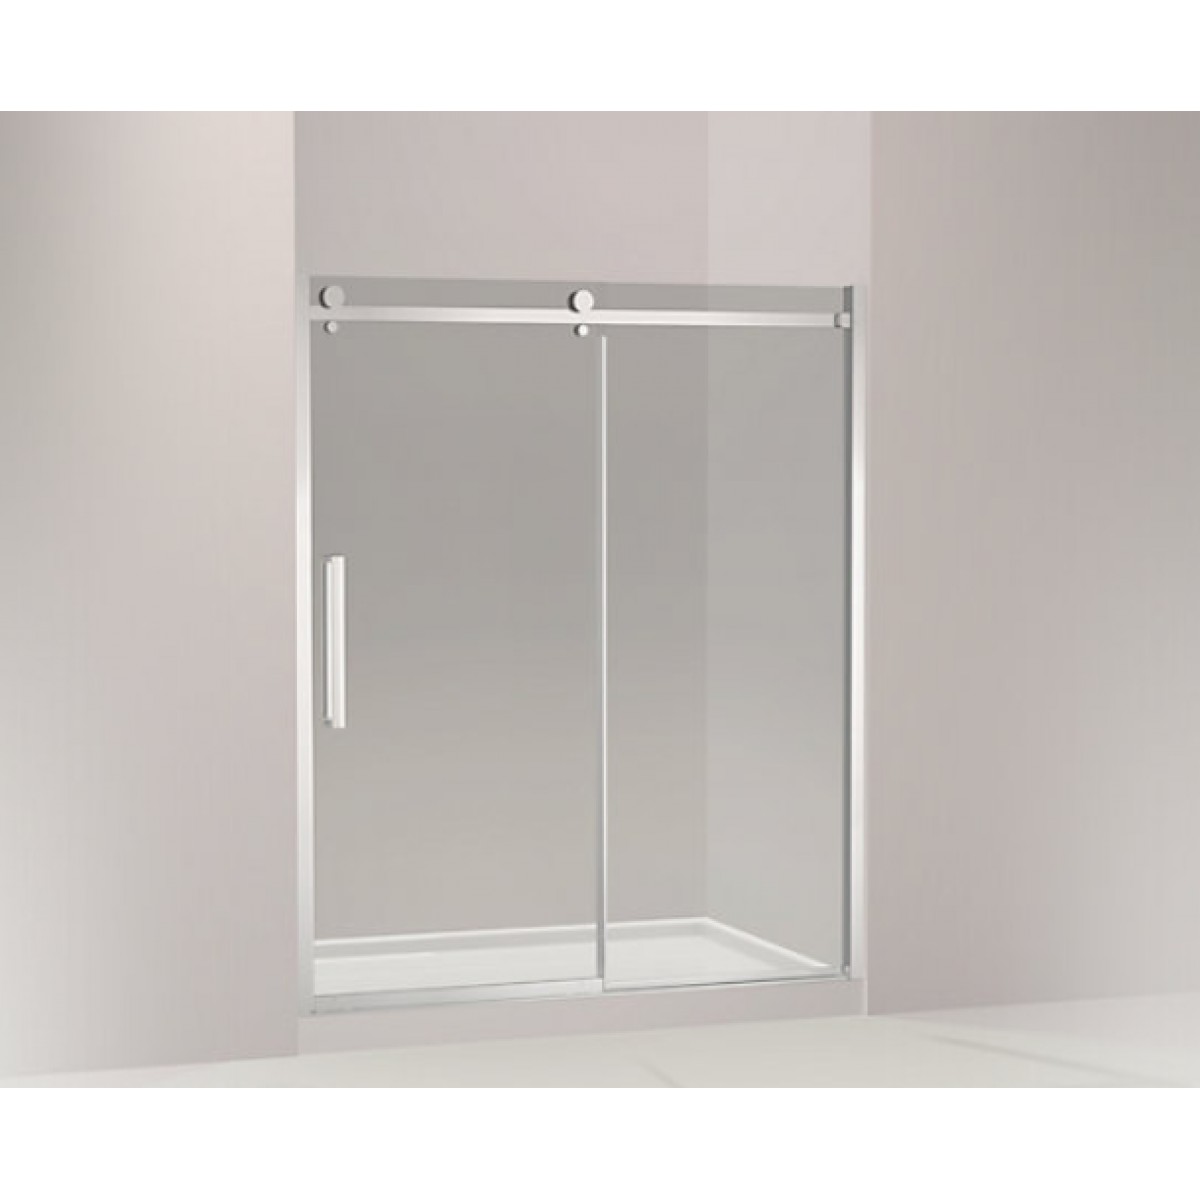 NEW LEVITY®宁乐移门淋浴房一字型(一扇固定玻璃 一扇门玻璃)